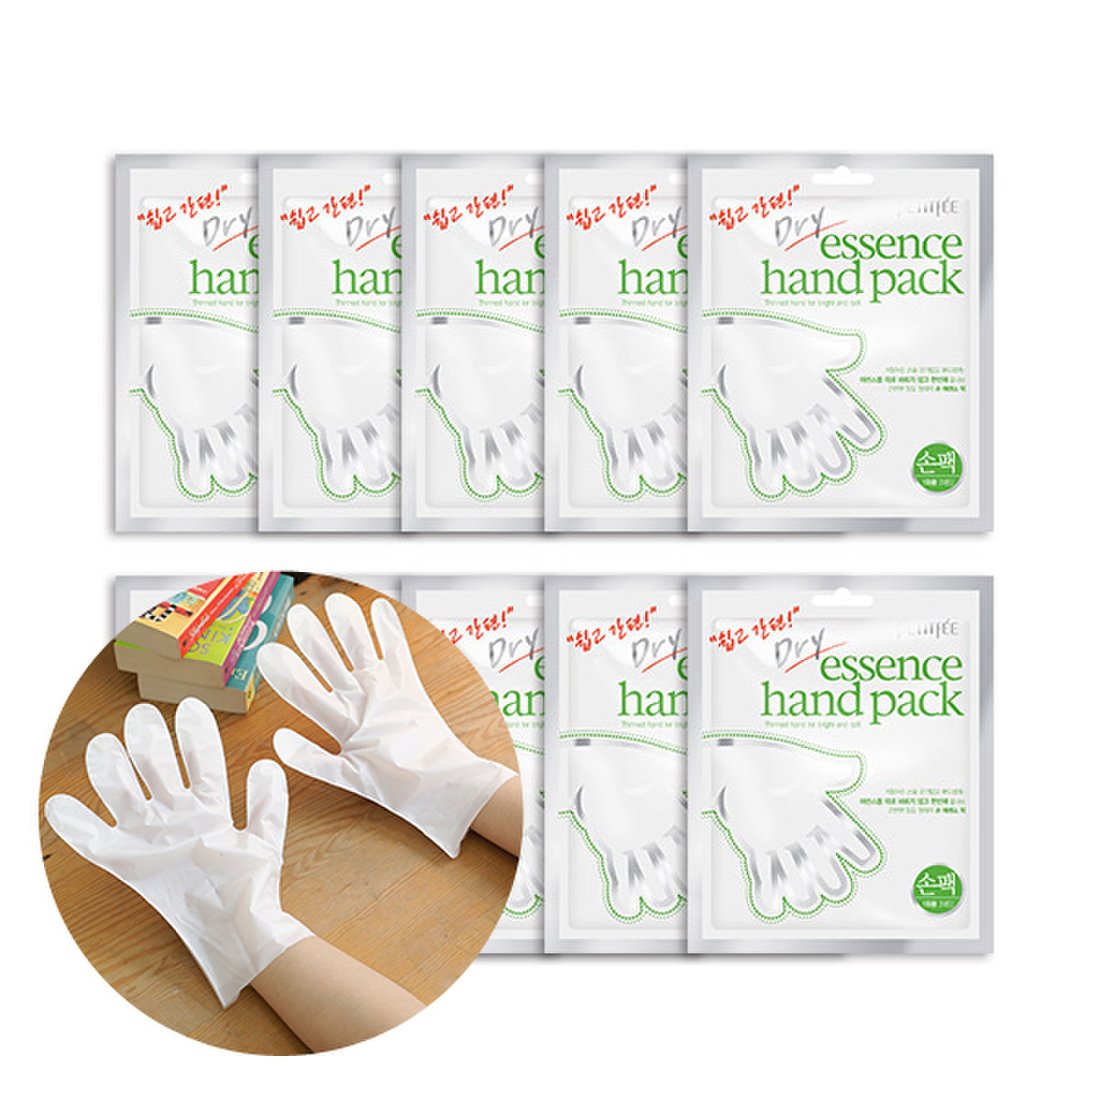 PETITFEE Dry Essence Hand Pack 1pair * 10ea